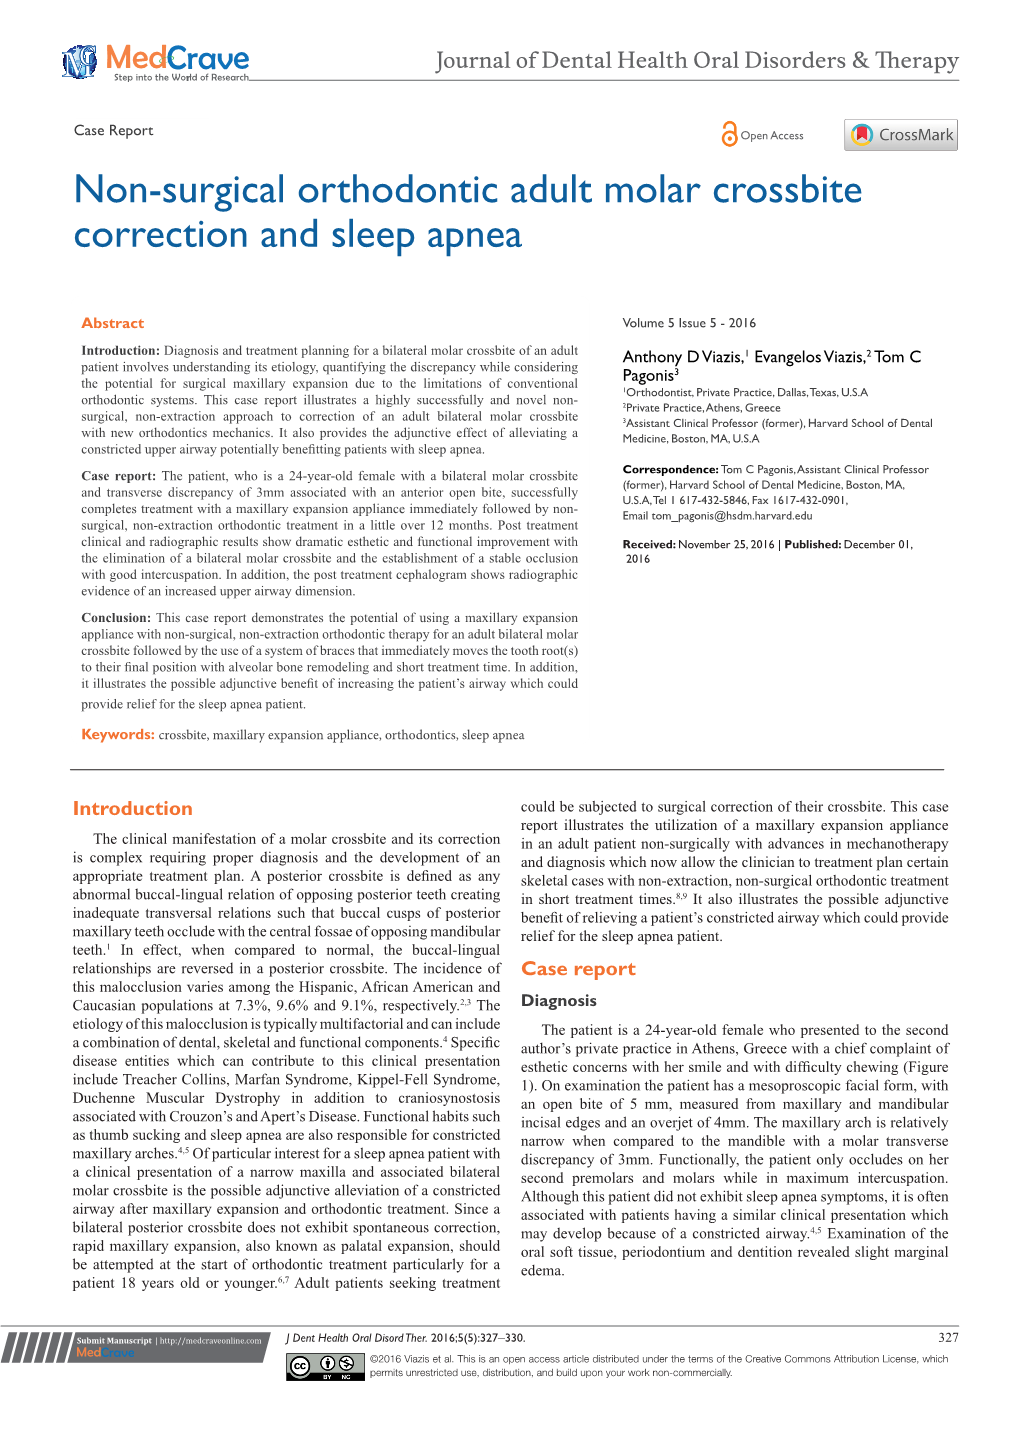 Non-Surgical Orthodontic Adult Molar Crossbite Correction and Sleep Apnea